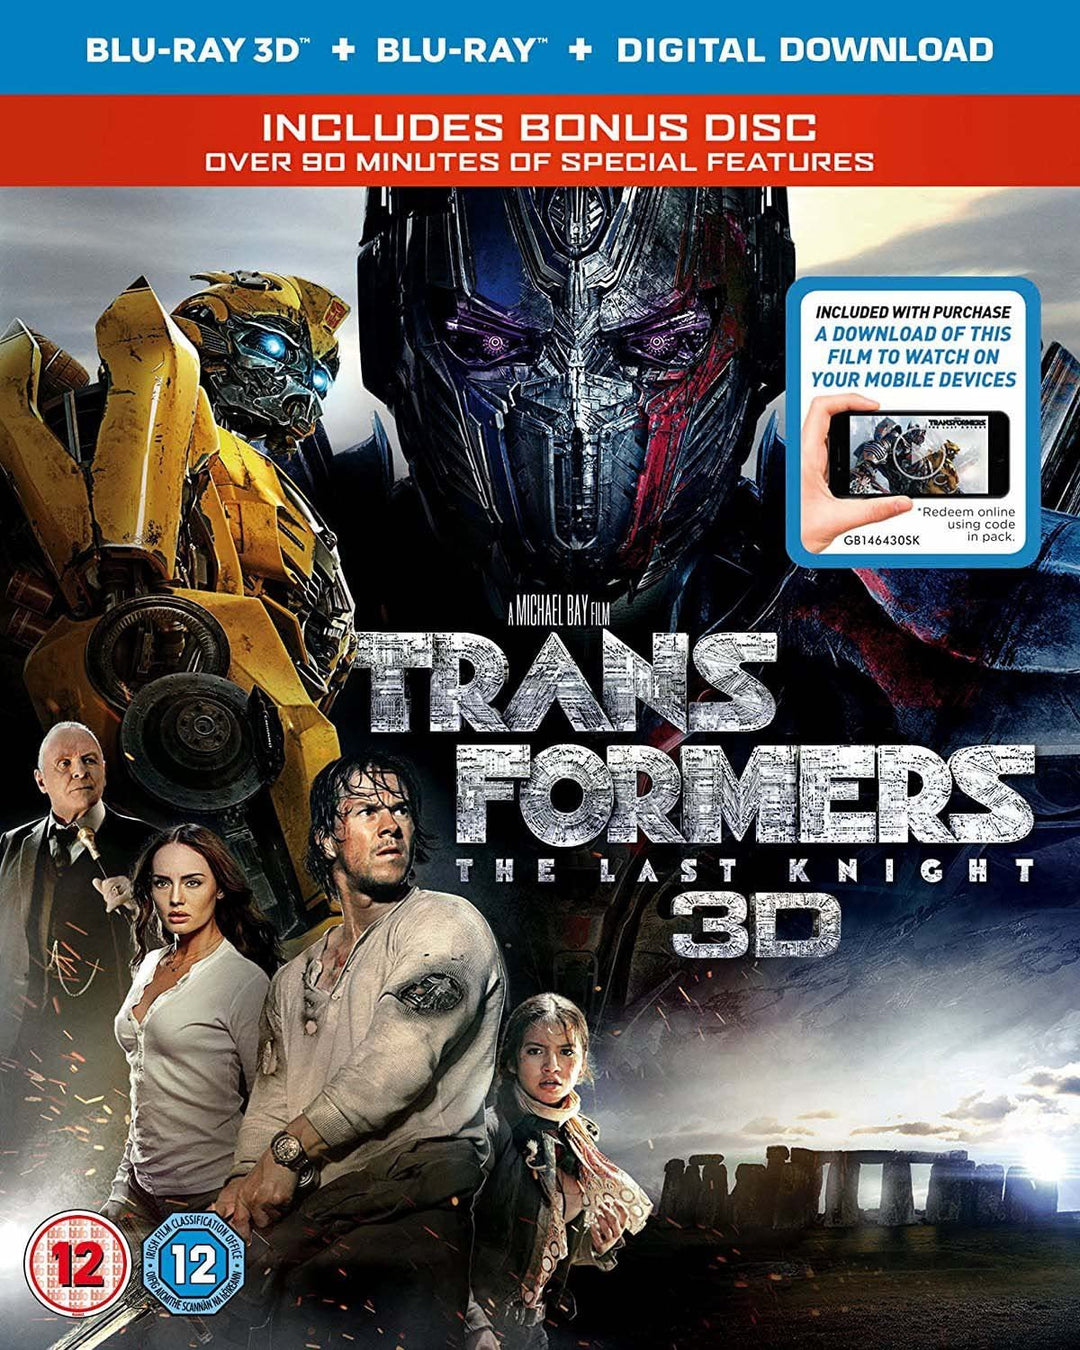 Transformers: The Last Knight 3D (3D+BD+Bonusschijf BD) [Blu-ray] [2017]